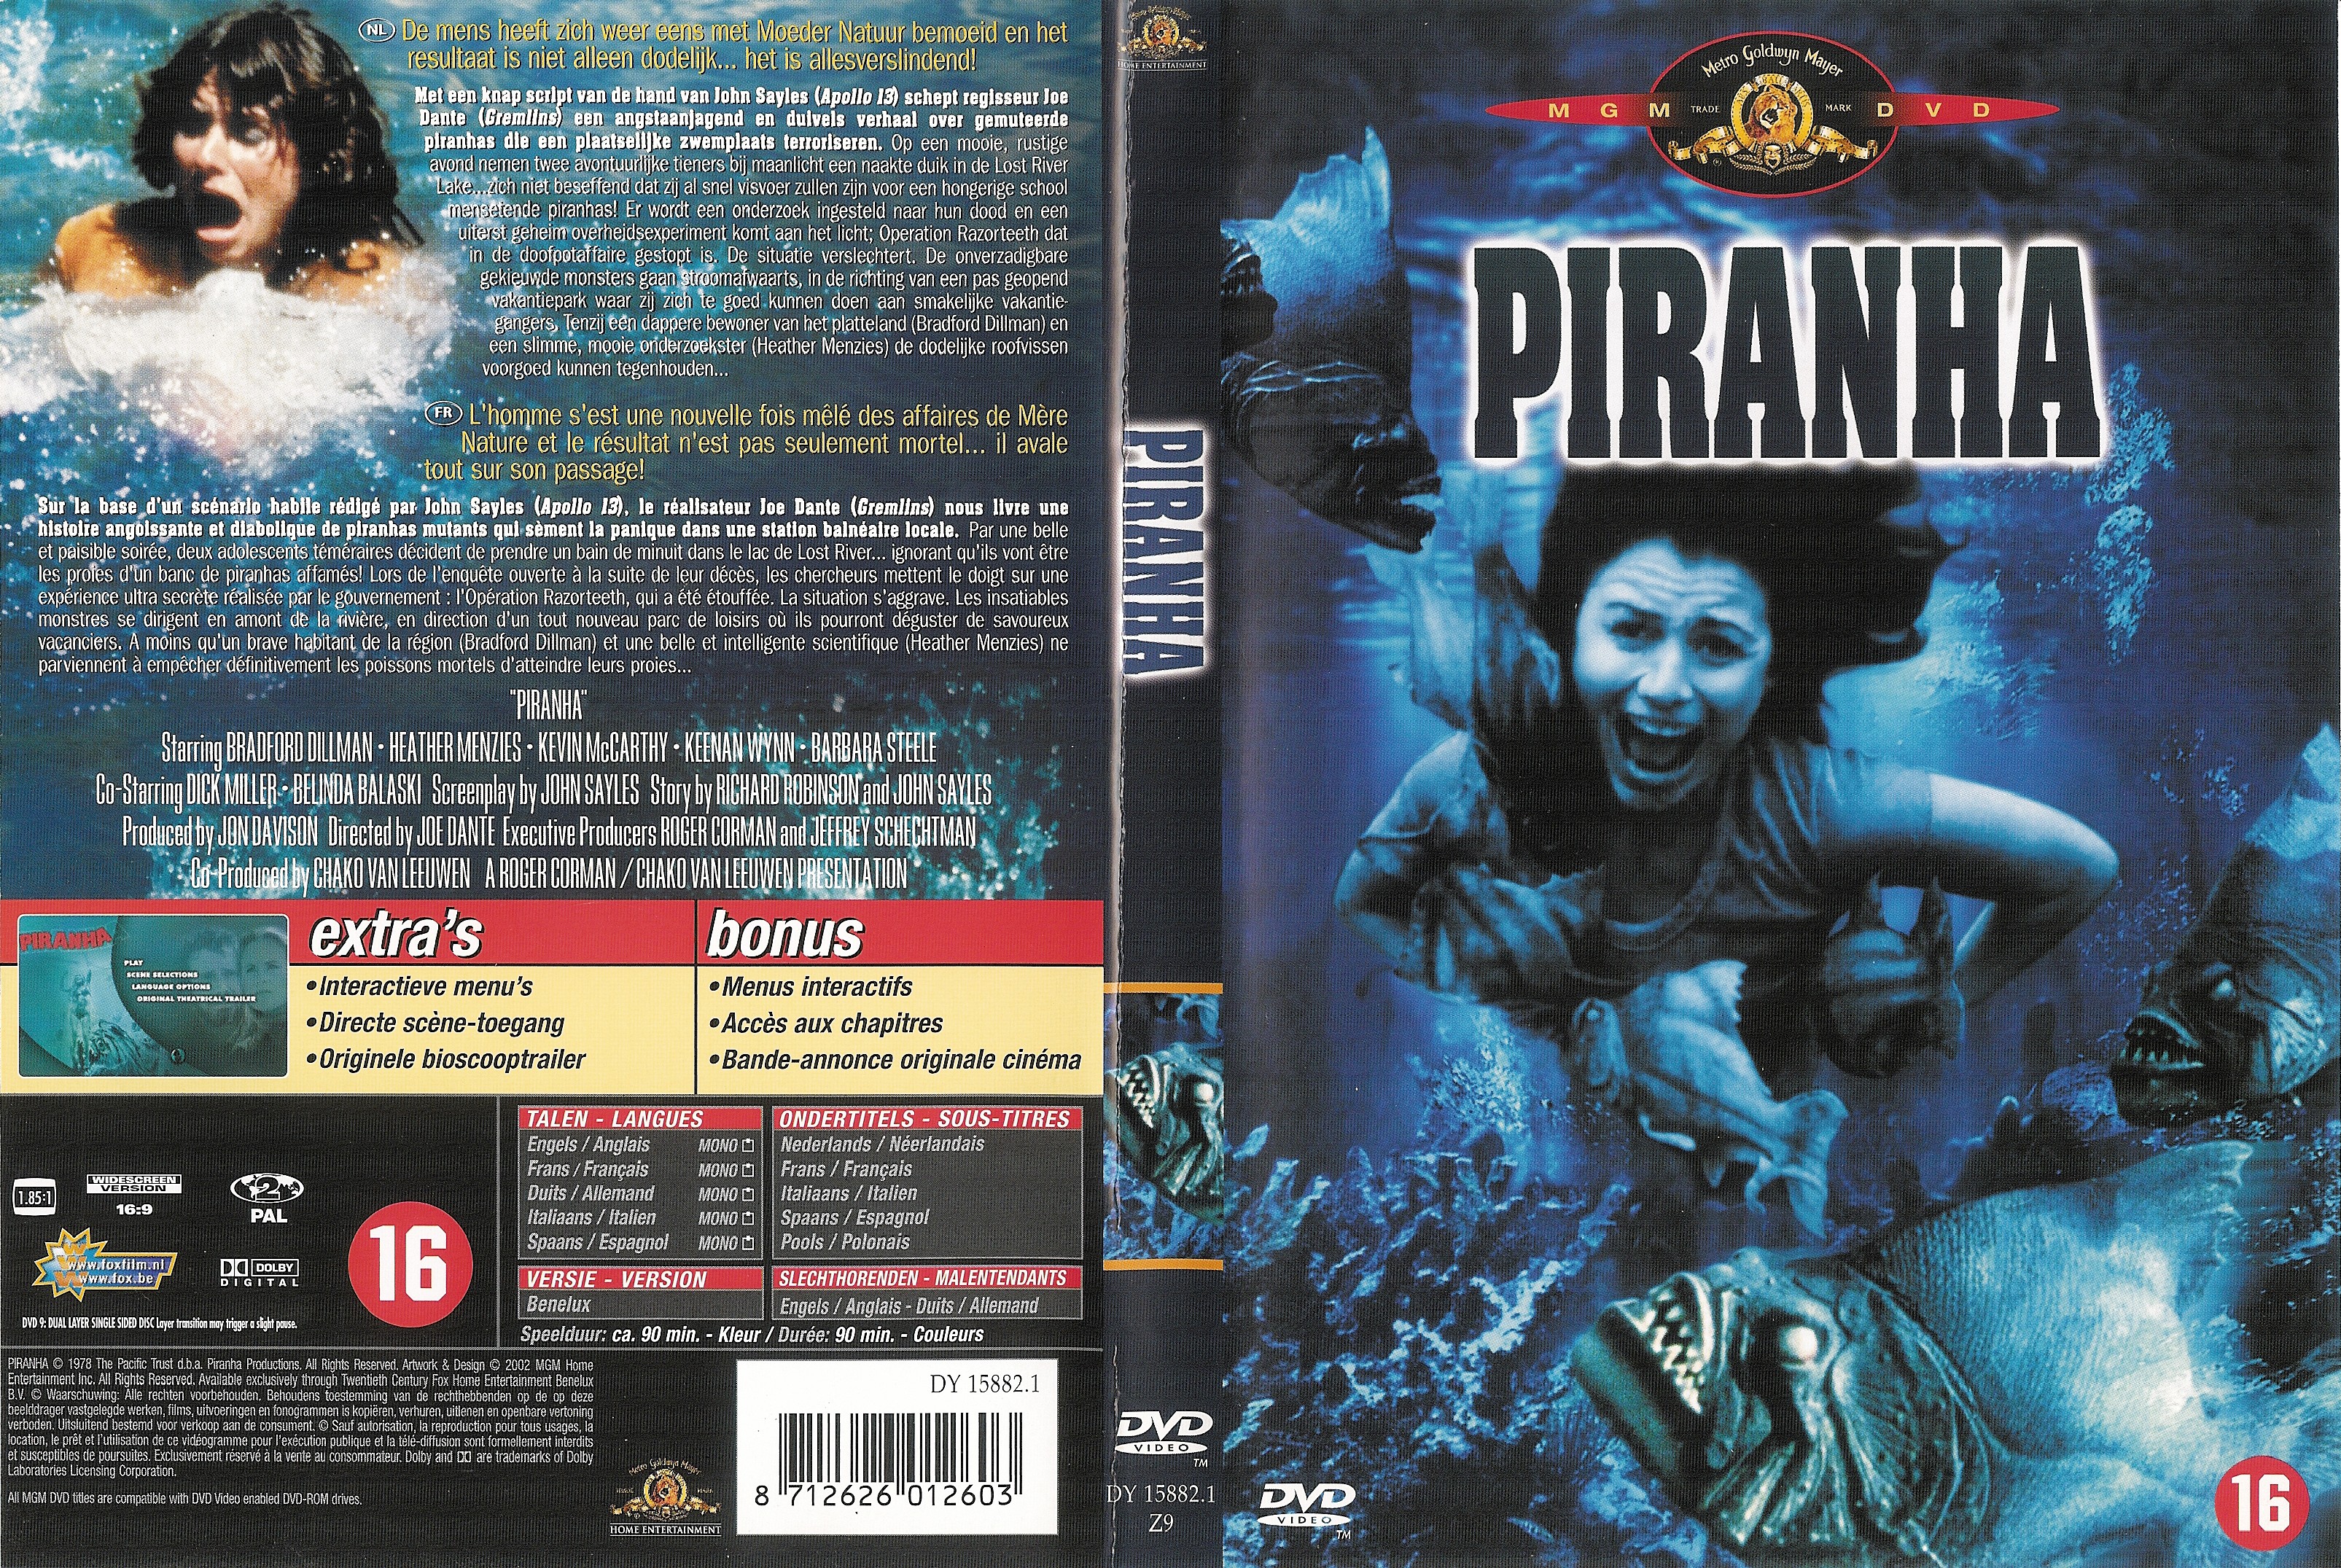 Jaquette DVD Piranha